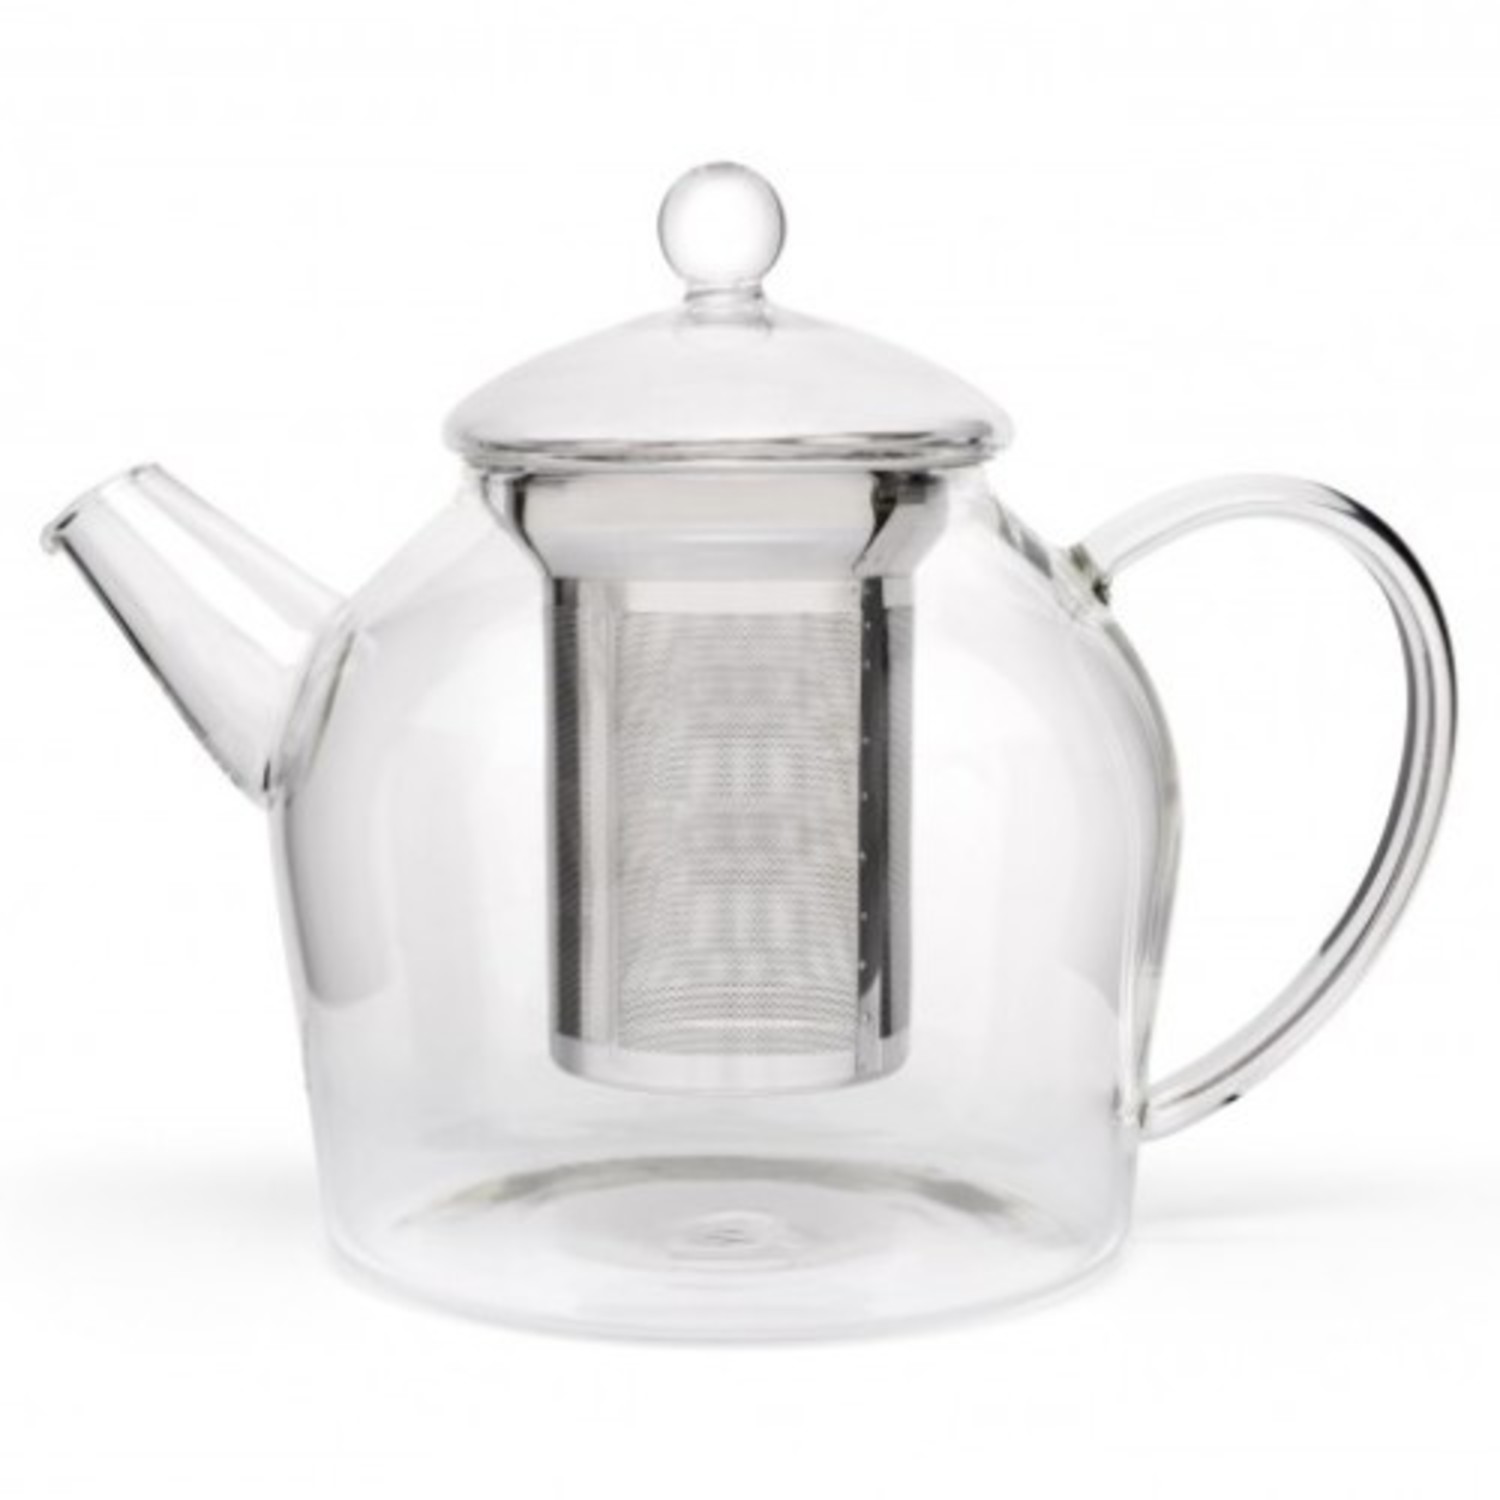 Bredemeijer glazen theepot Santhee - the art of tea.